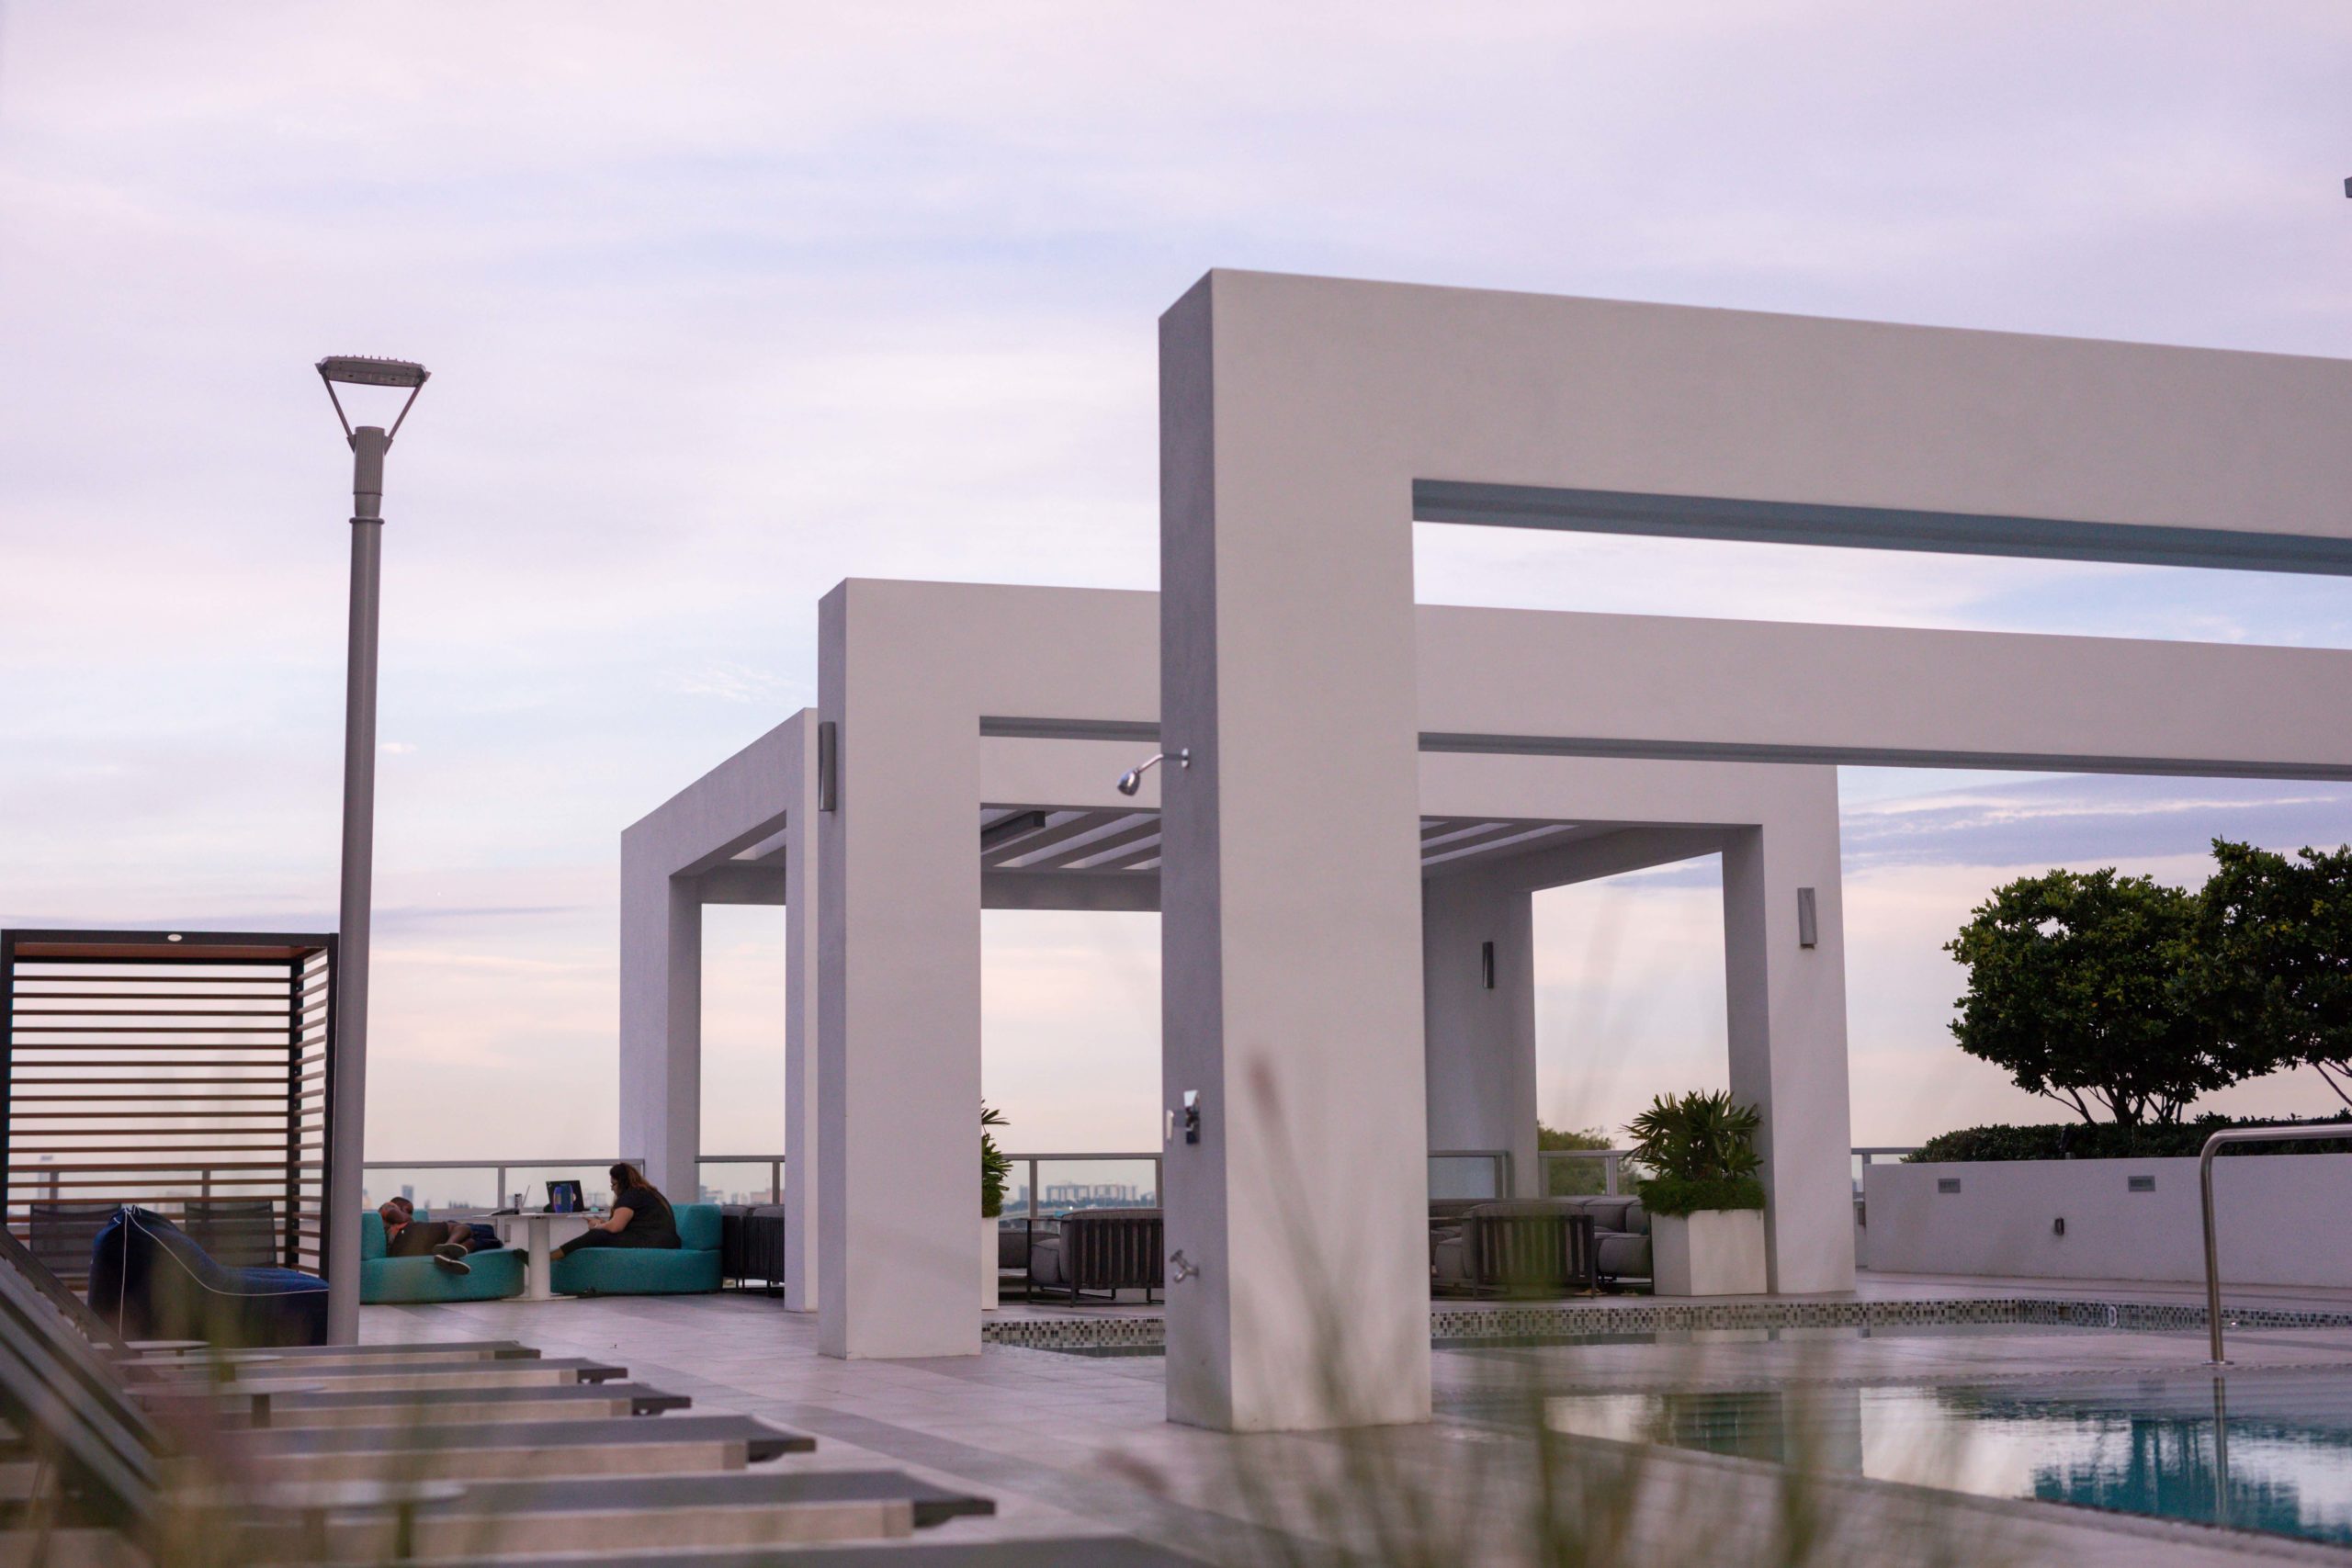 Quadro Miami - Recently featured in Forbes, the Miami Design